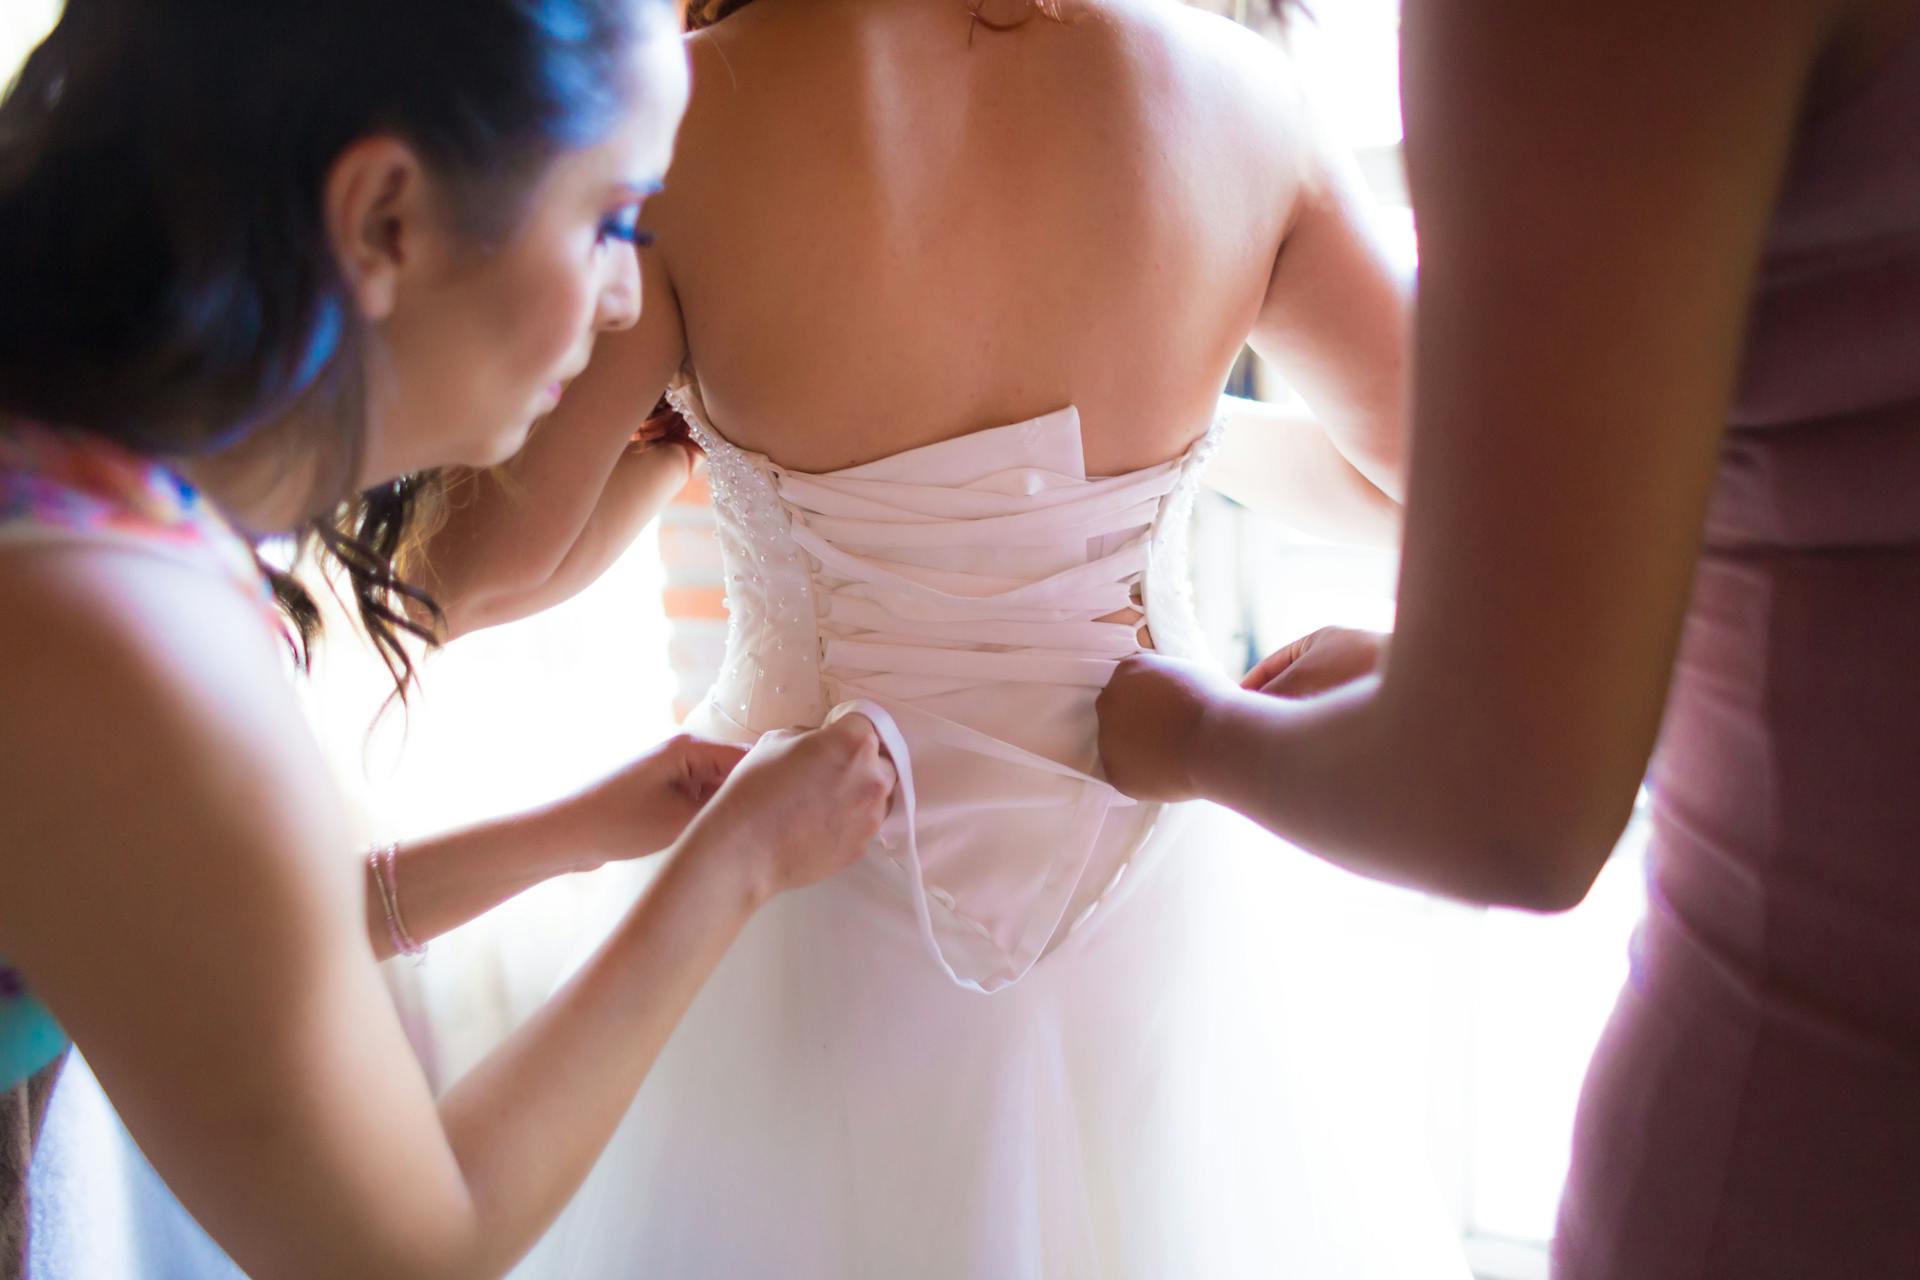 A bride getting dressed | Source: Pexels